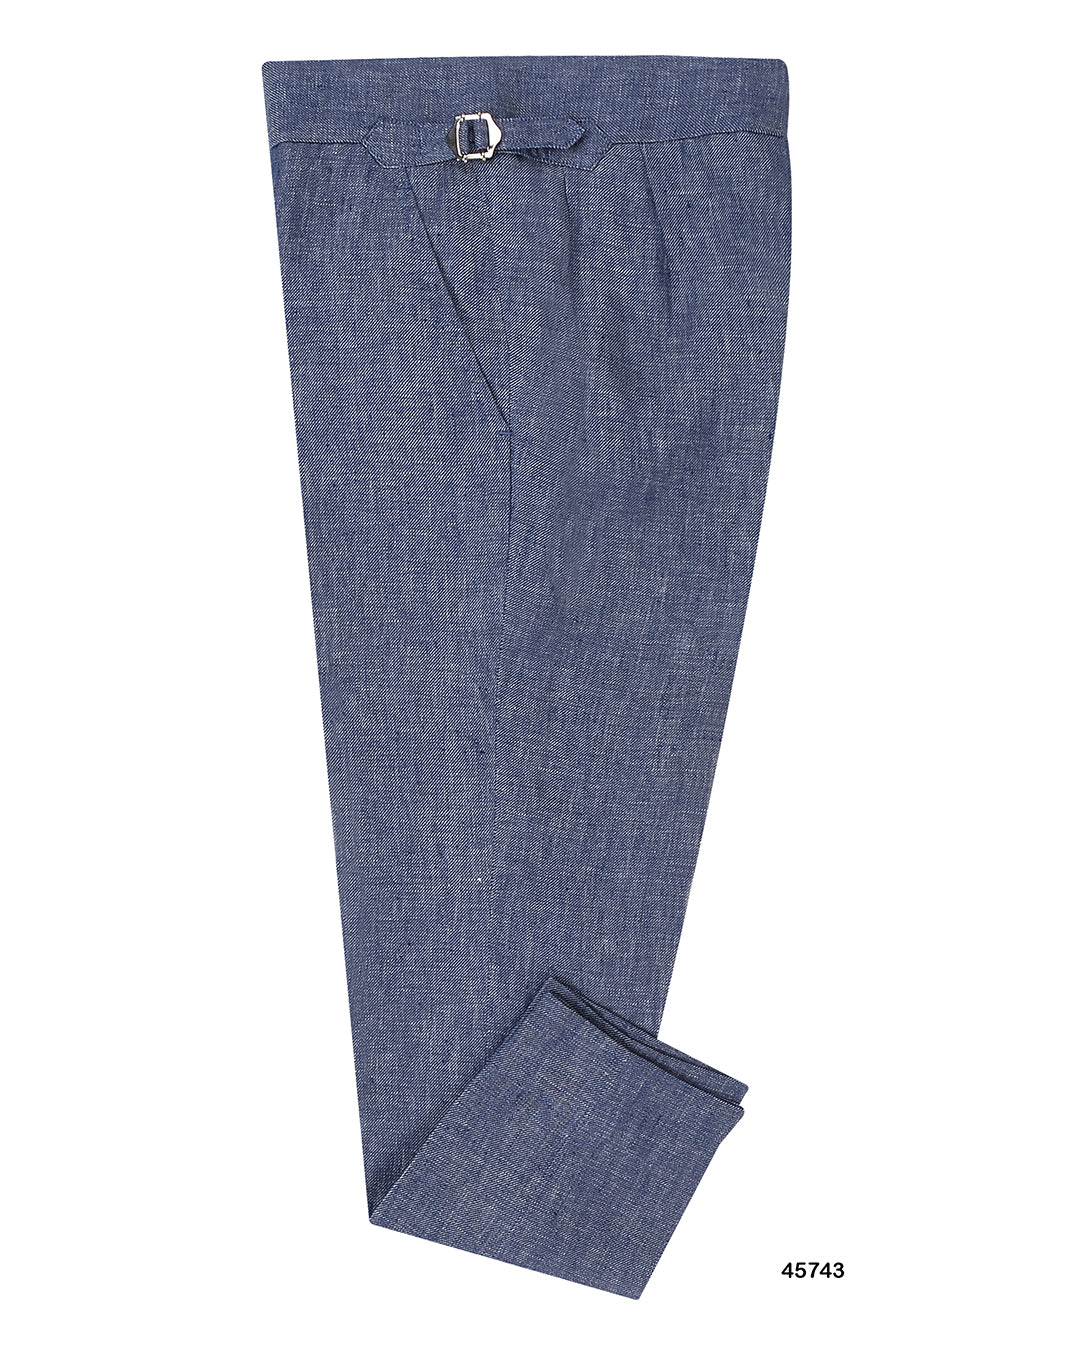 Side view of custom linen pants for men by Luxire in denim blue